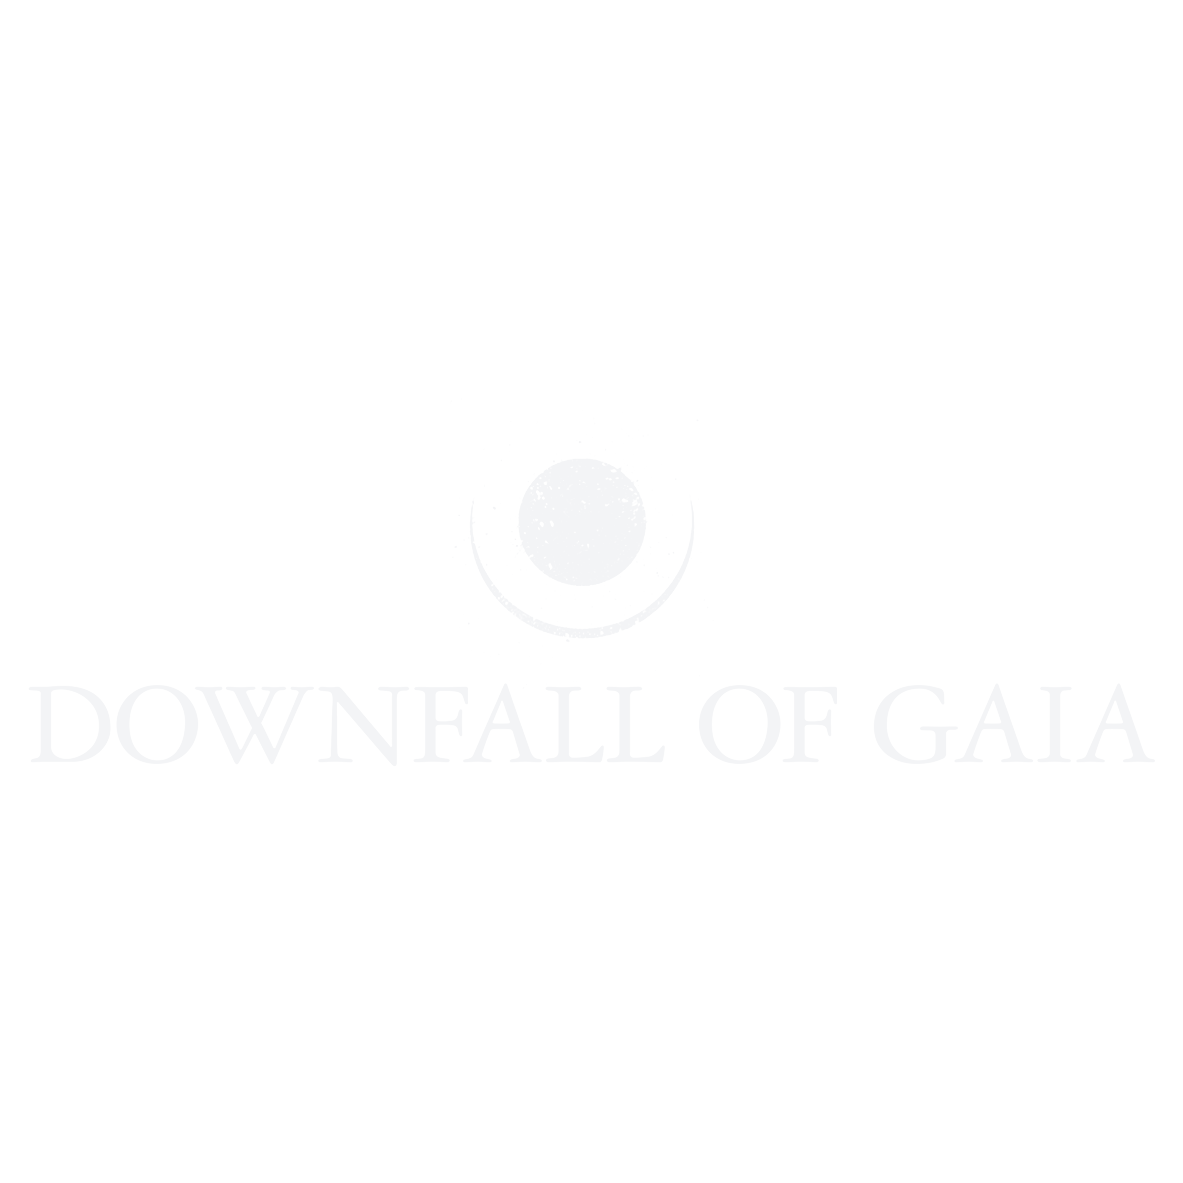 DOWNFALL OF GAIA